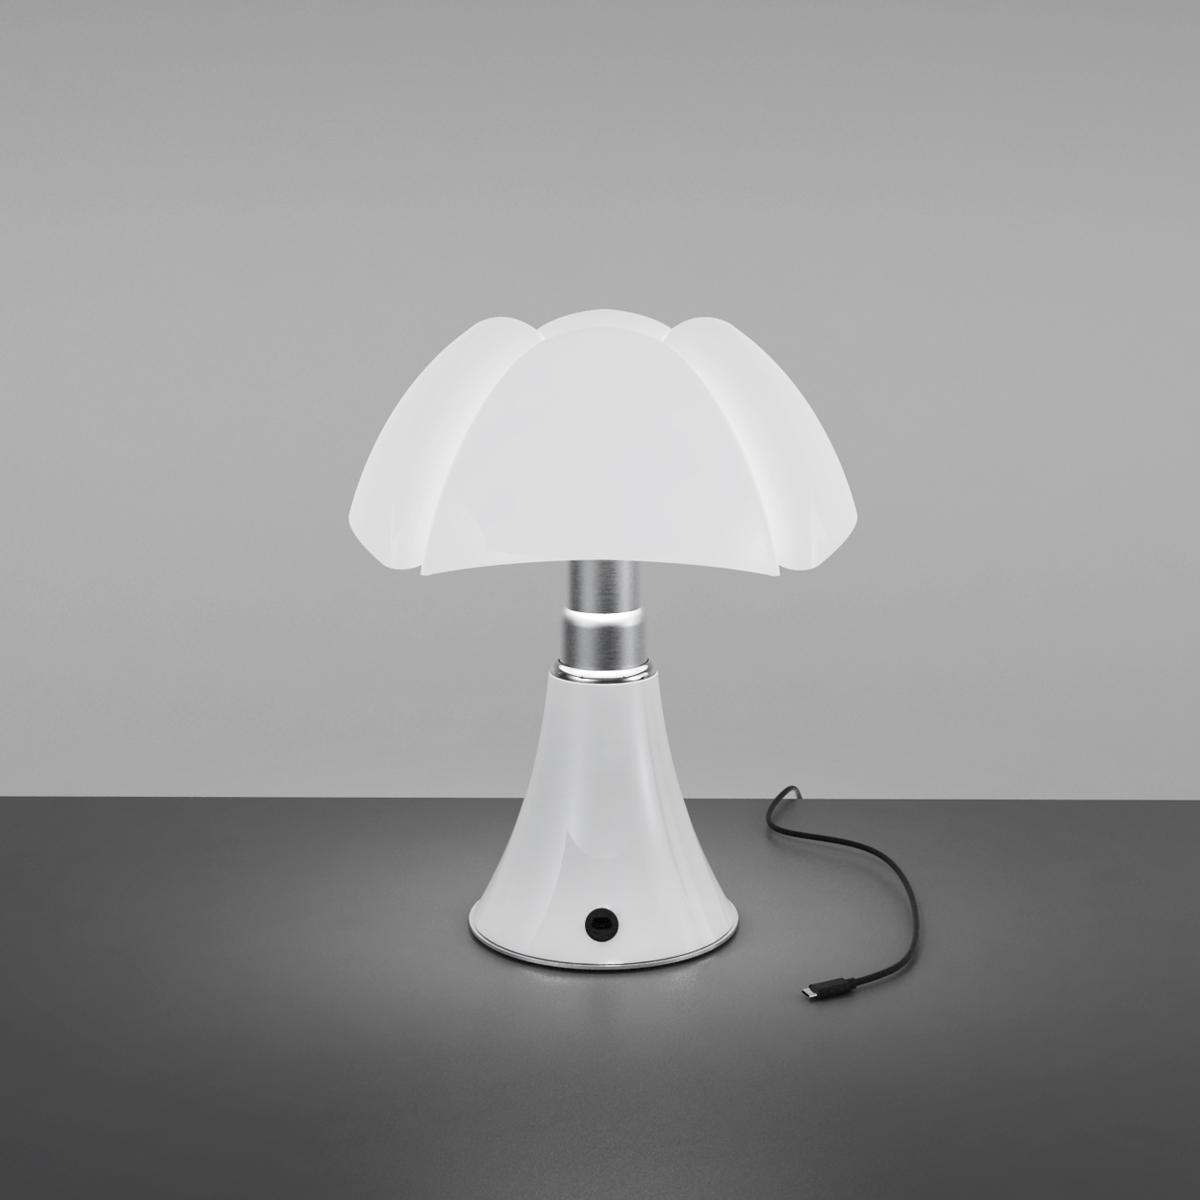 Minipipistrello Cordless Table Lamp, Cordless Table Lamp